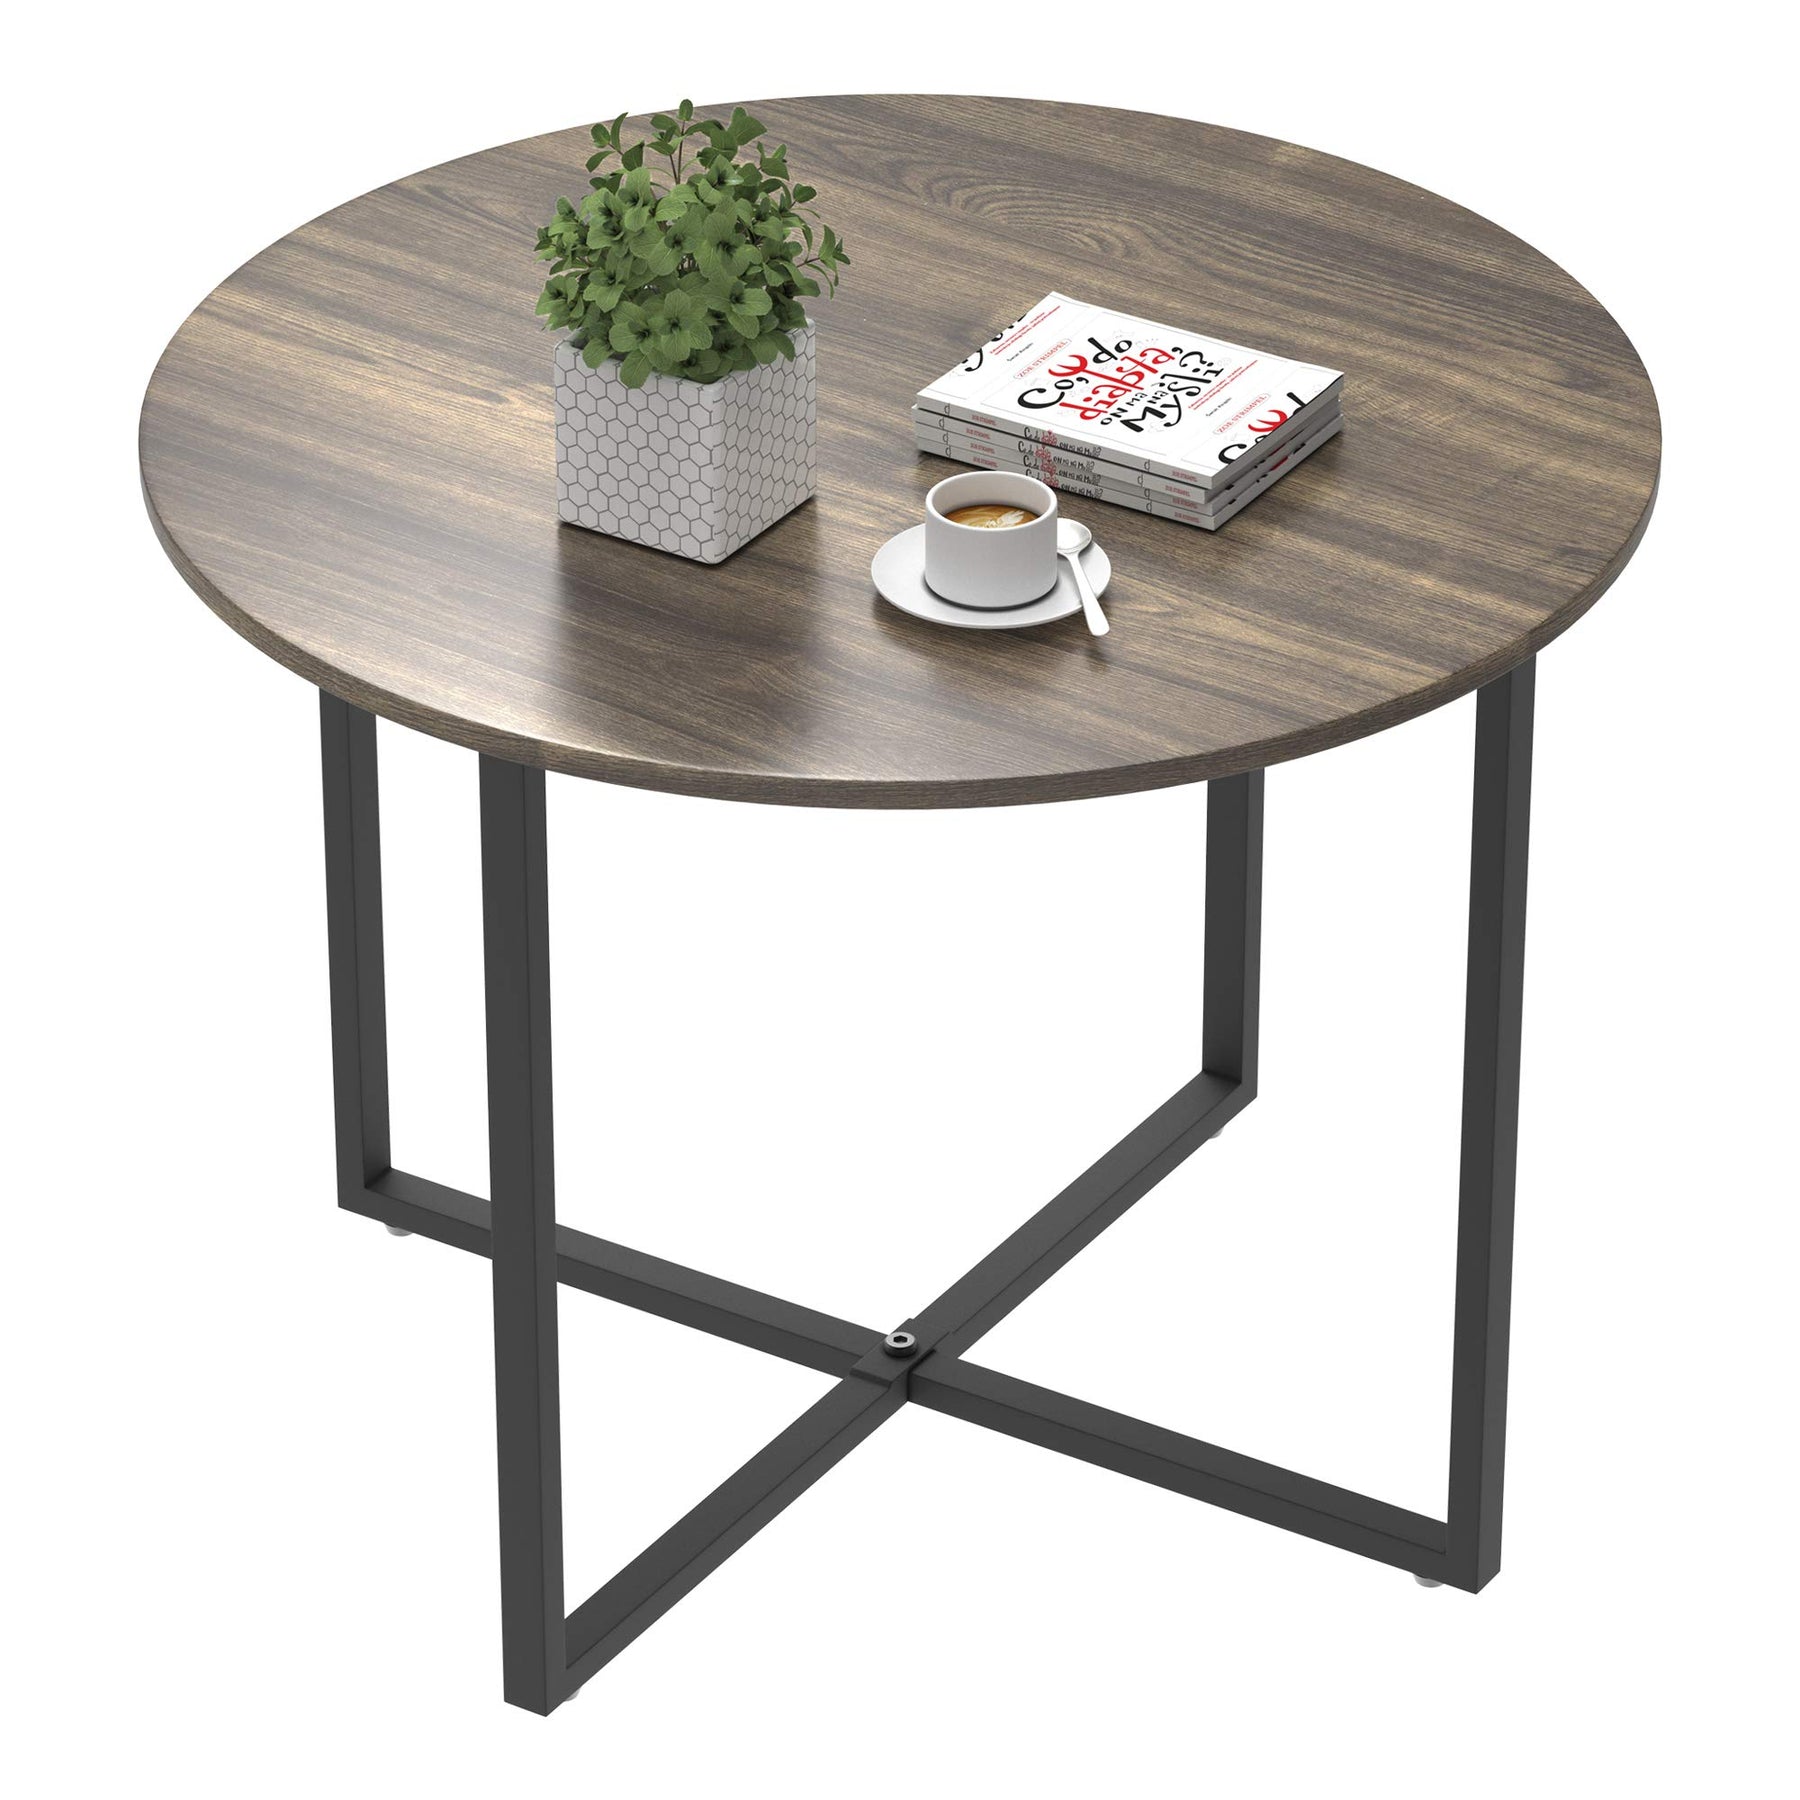 IDEALHOUSE 60CM Round Coffee Table Grey